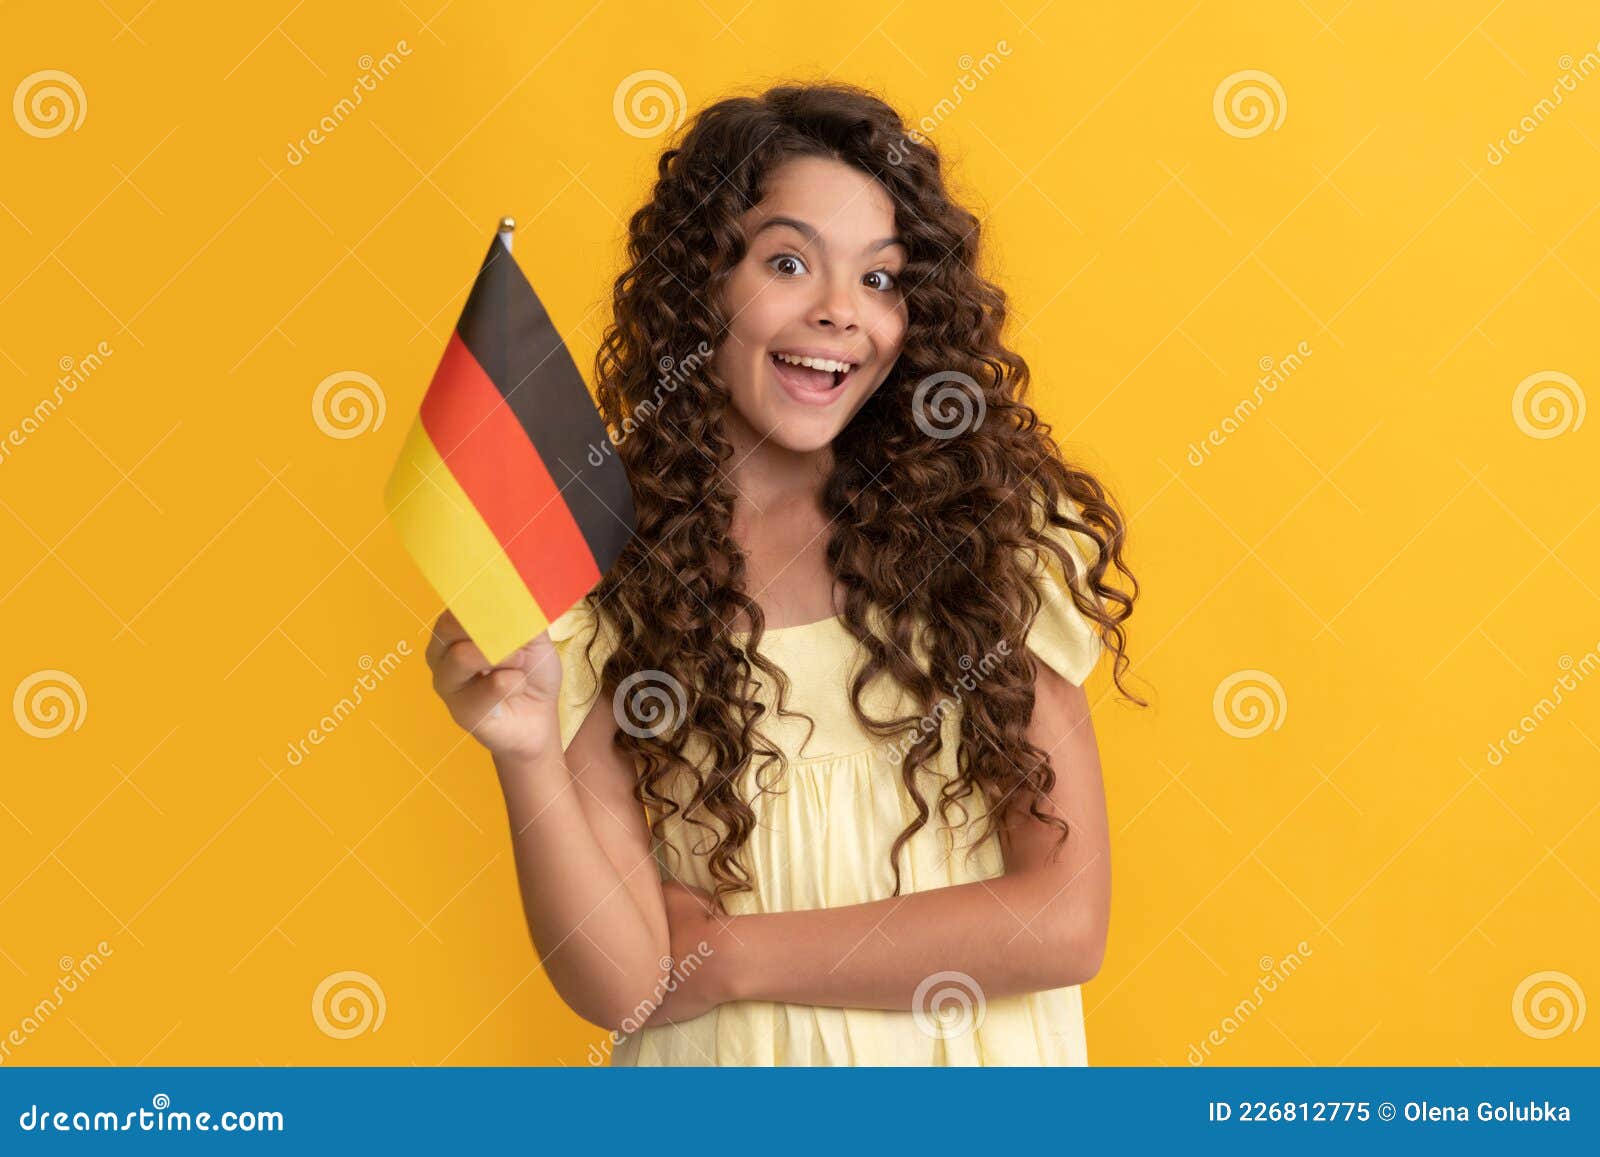 German teen girls